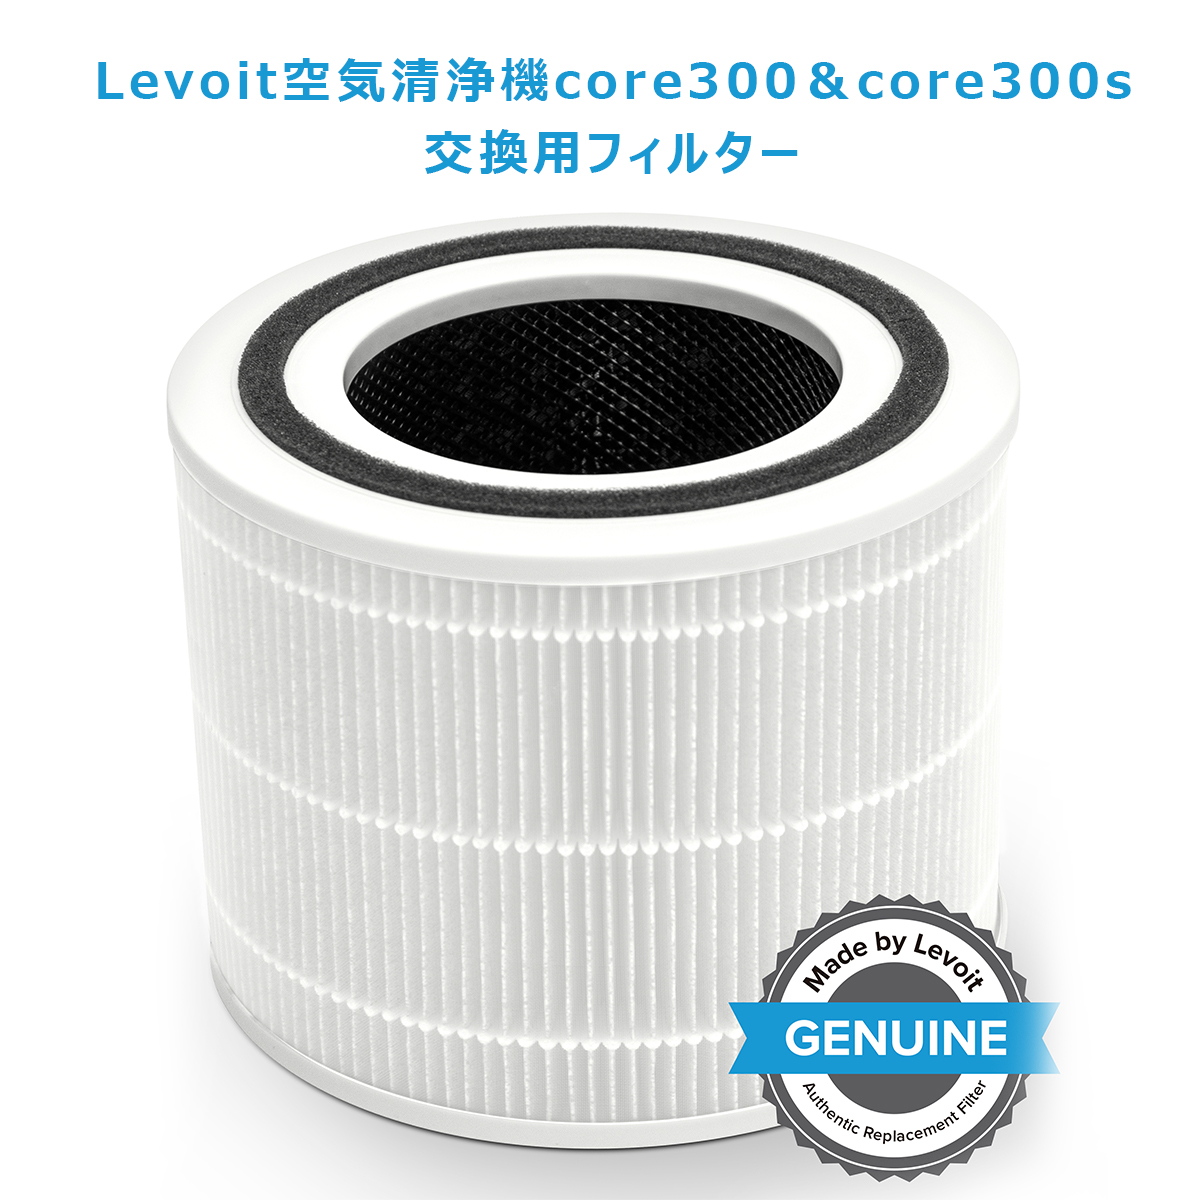 Levoit Core 300 空気清浄機 2021年製 フィルター交換済み - 空調